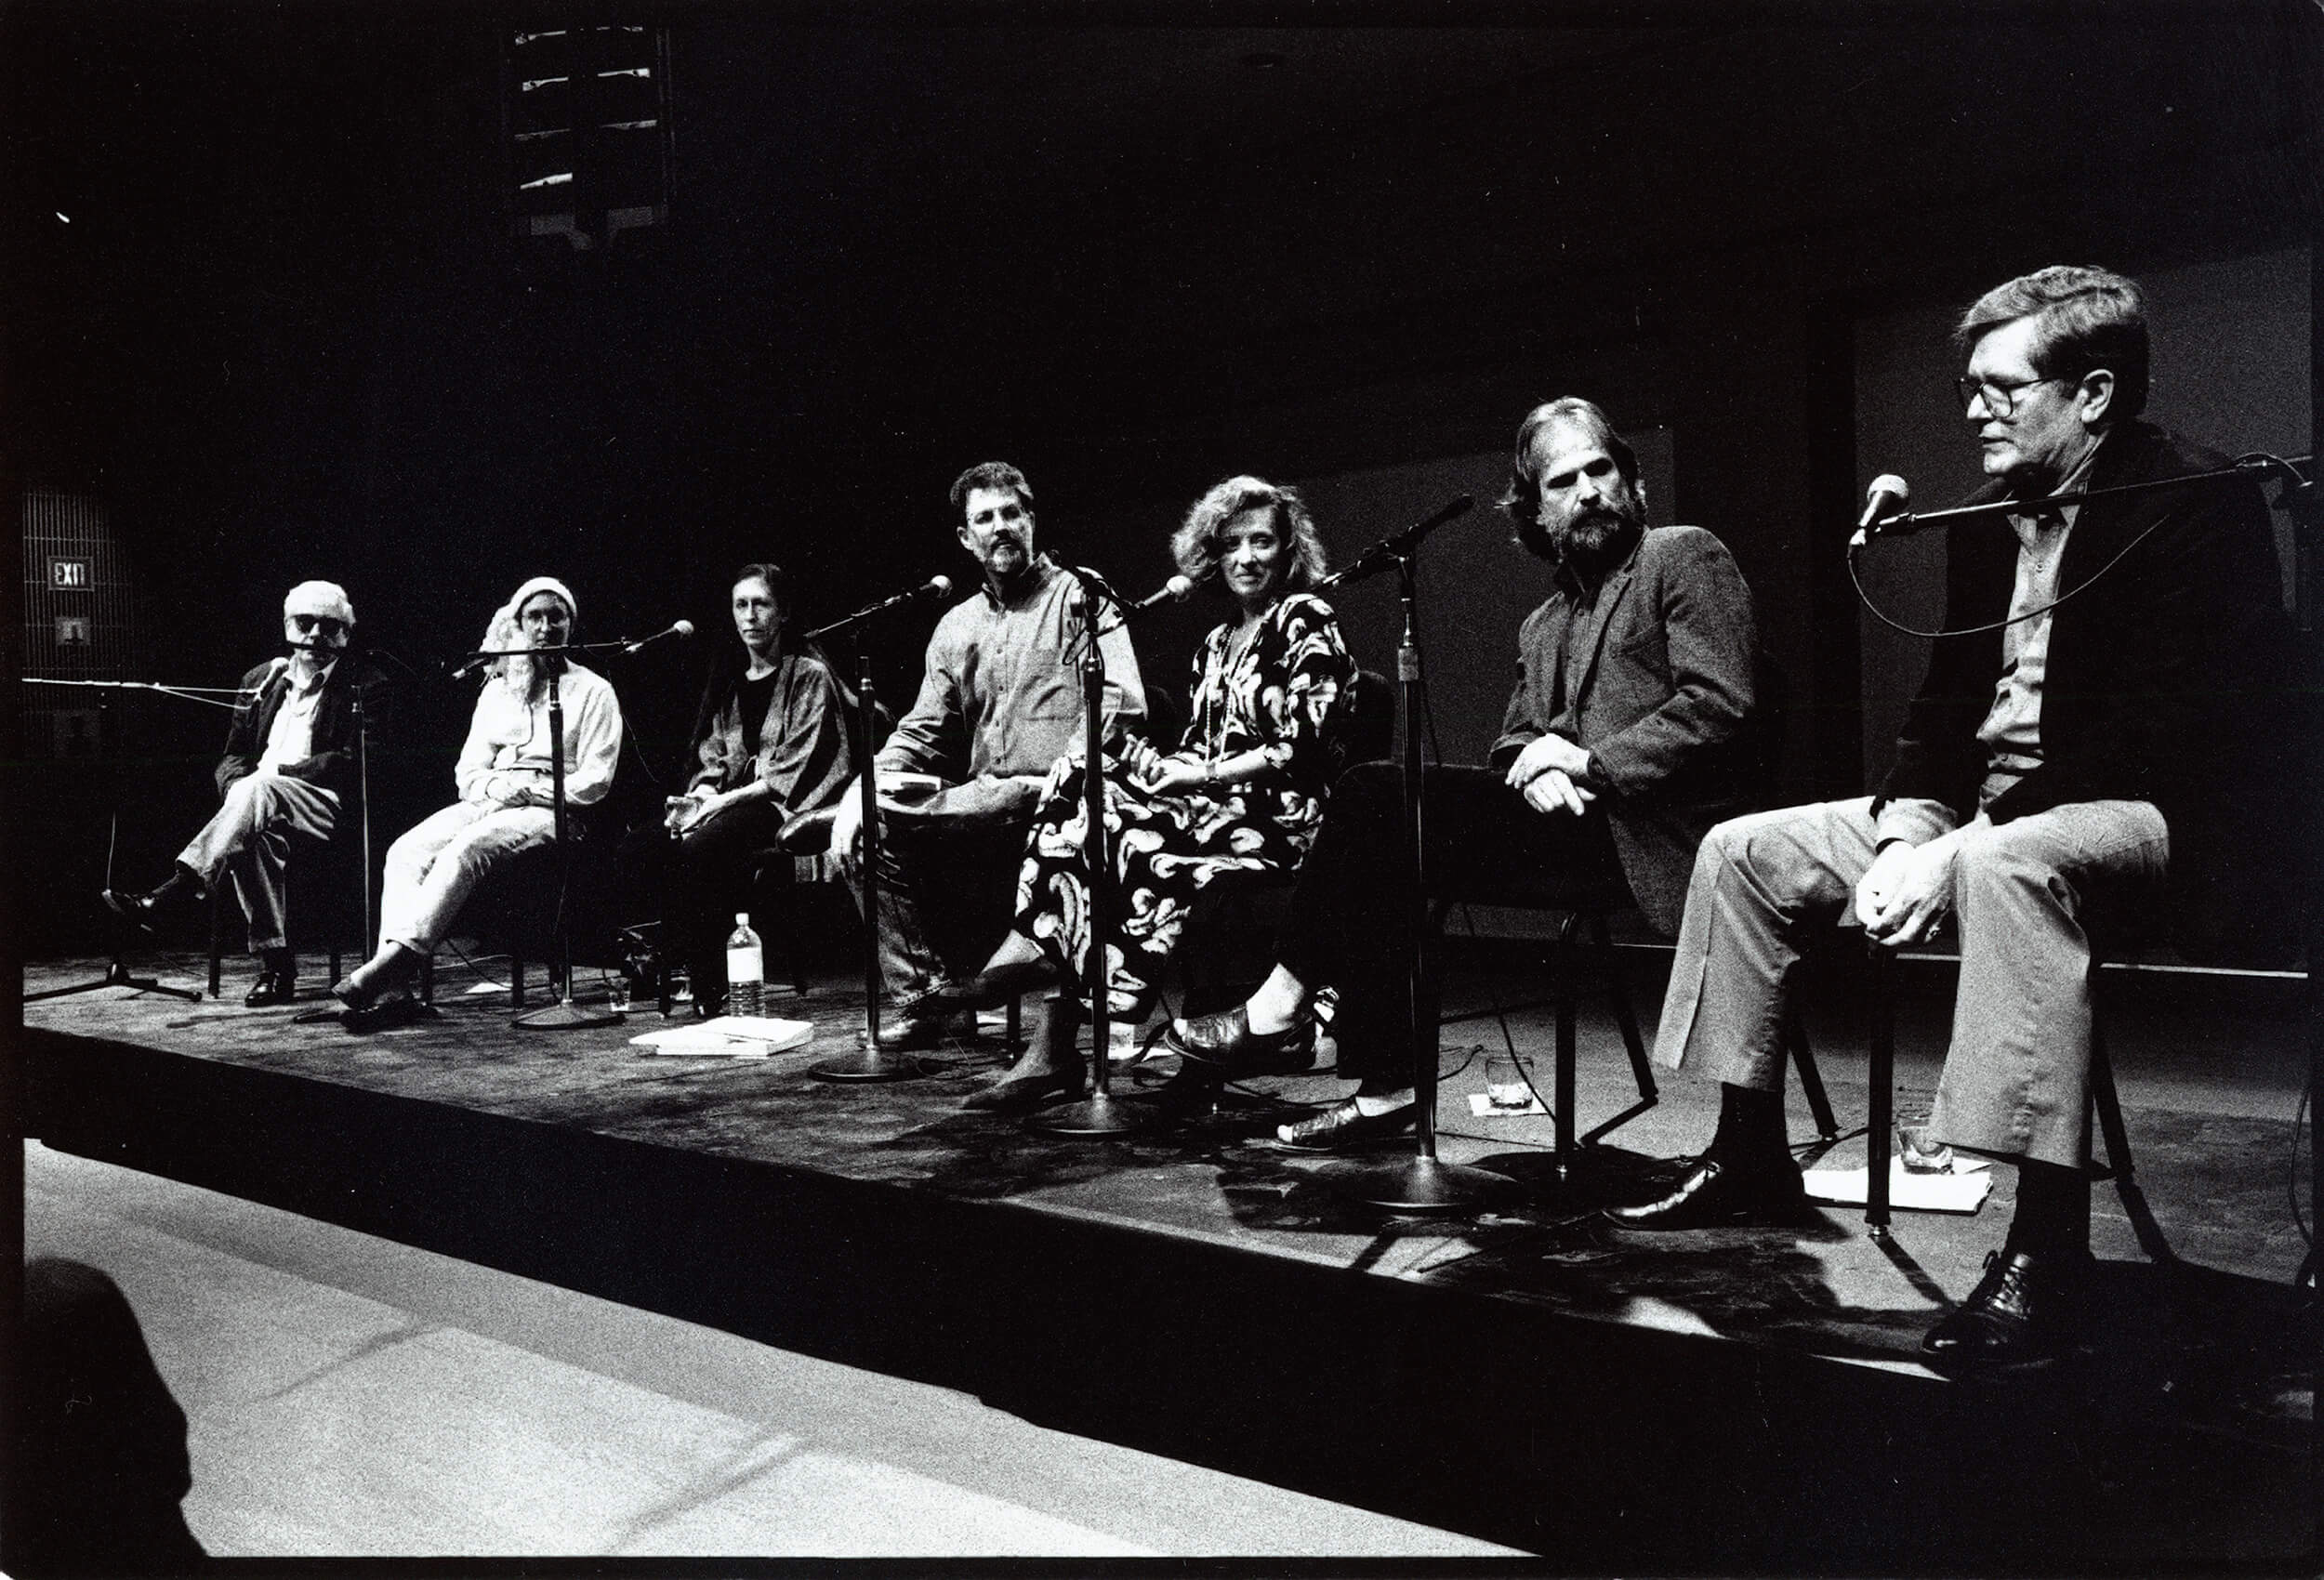 John Cage panel, from left to right: Robert Ashley, Barbara Monk Feldman, Meredith Monk, Charles Amirkhanian, Julie Lazar, Trimpin, Donald Gillespie